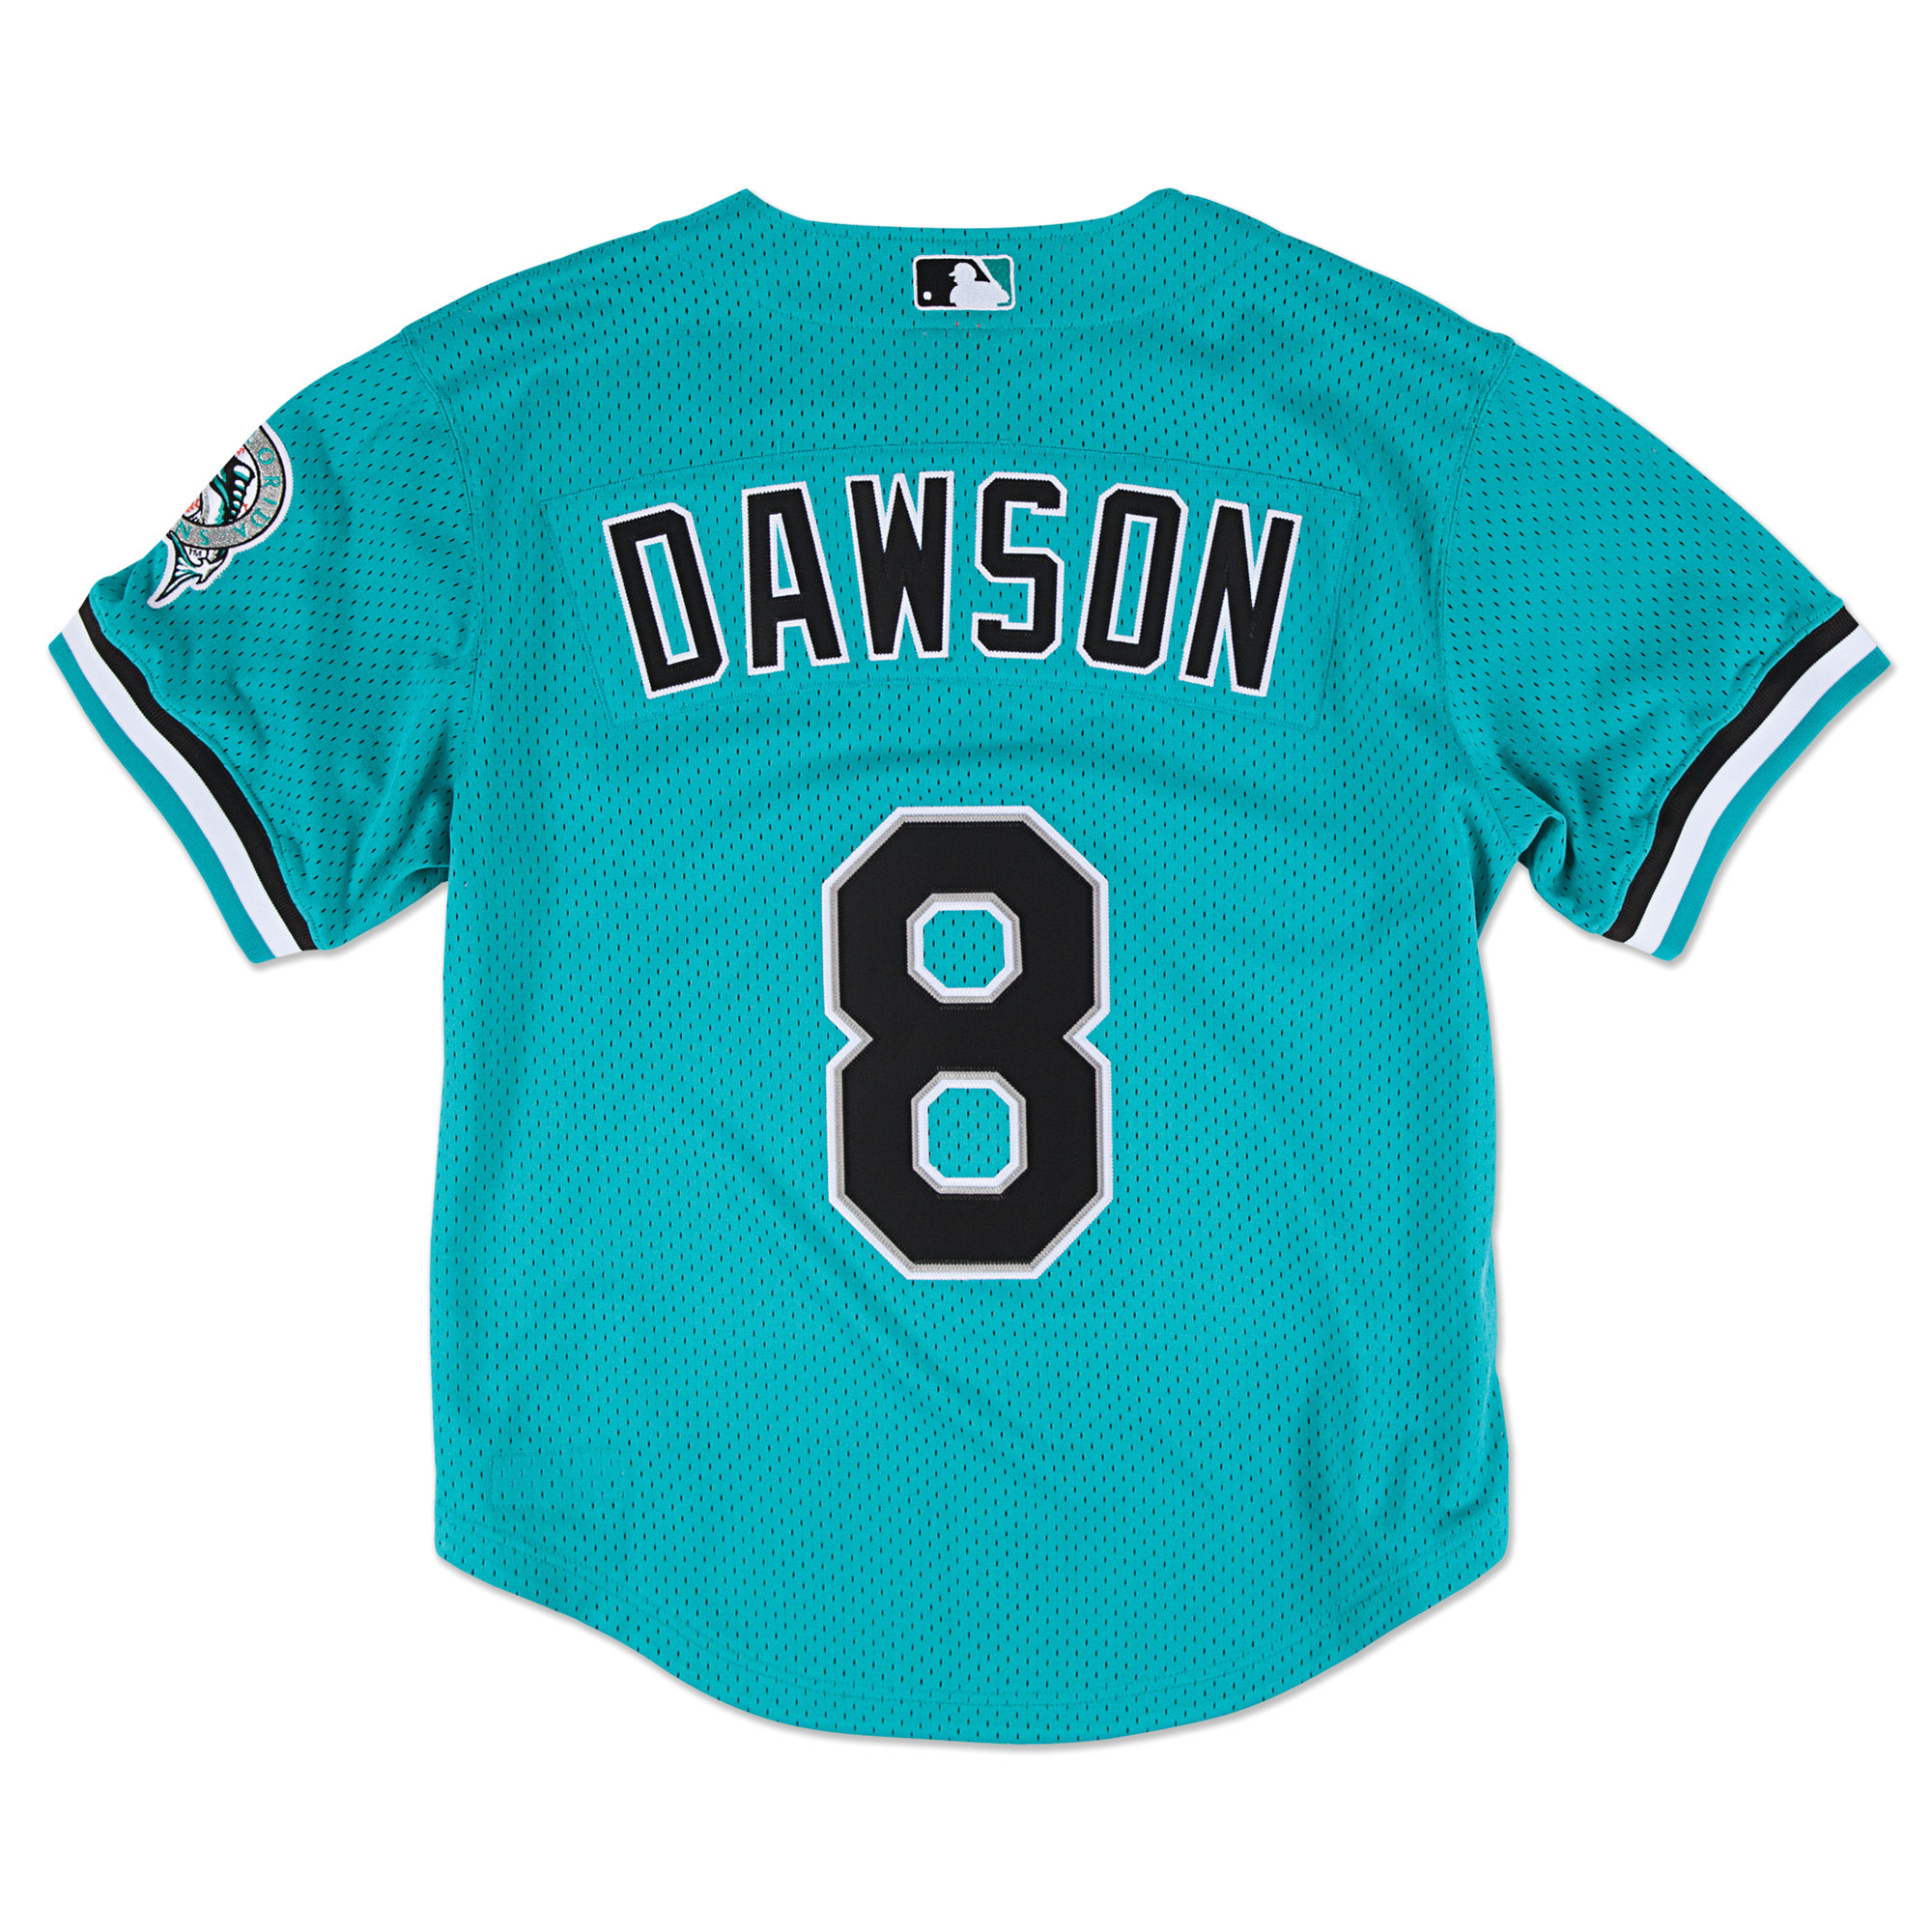 Andre Dawson #8 Florida Marlins Mitchell & Ness BP Baseball